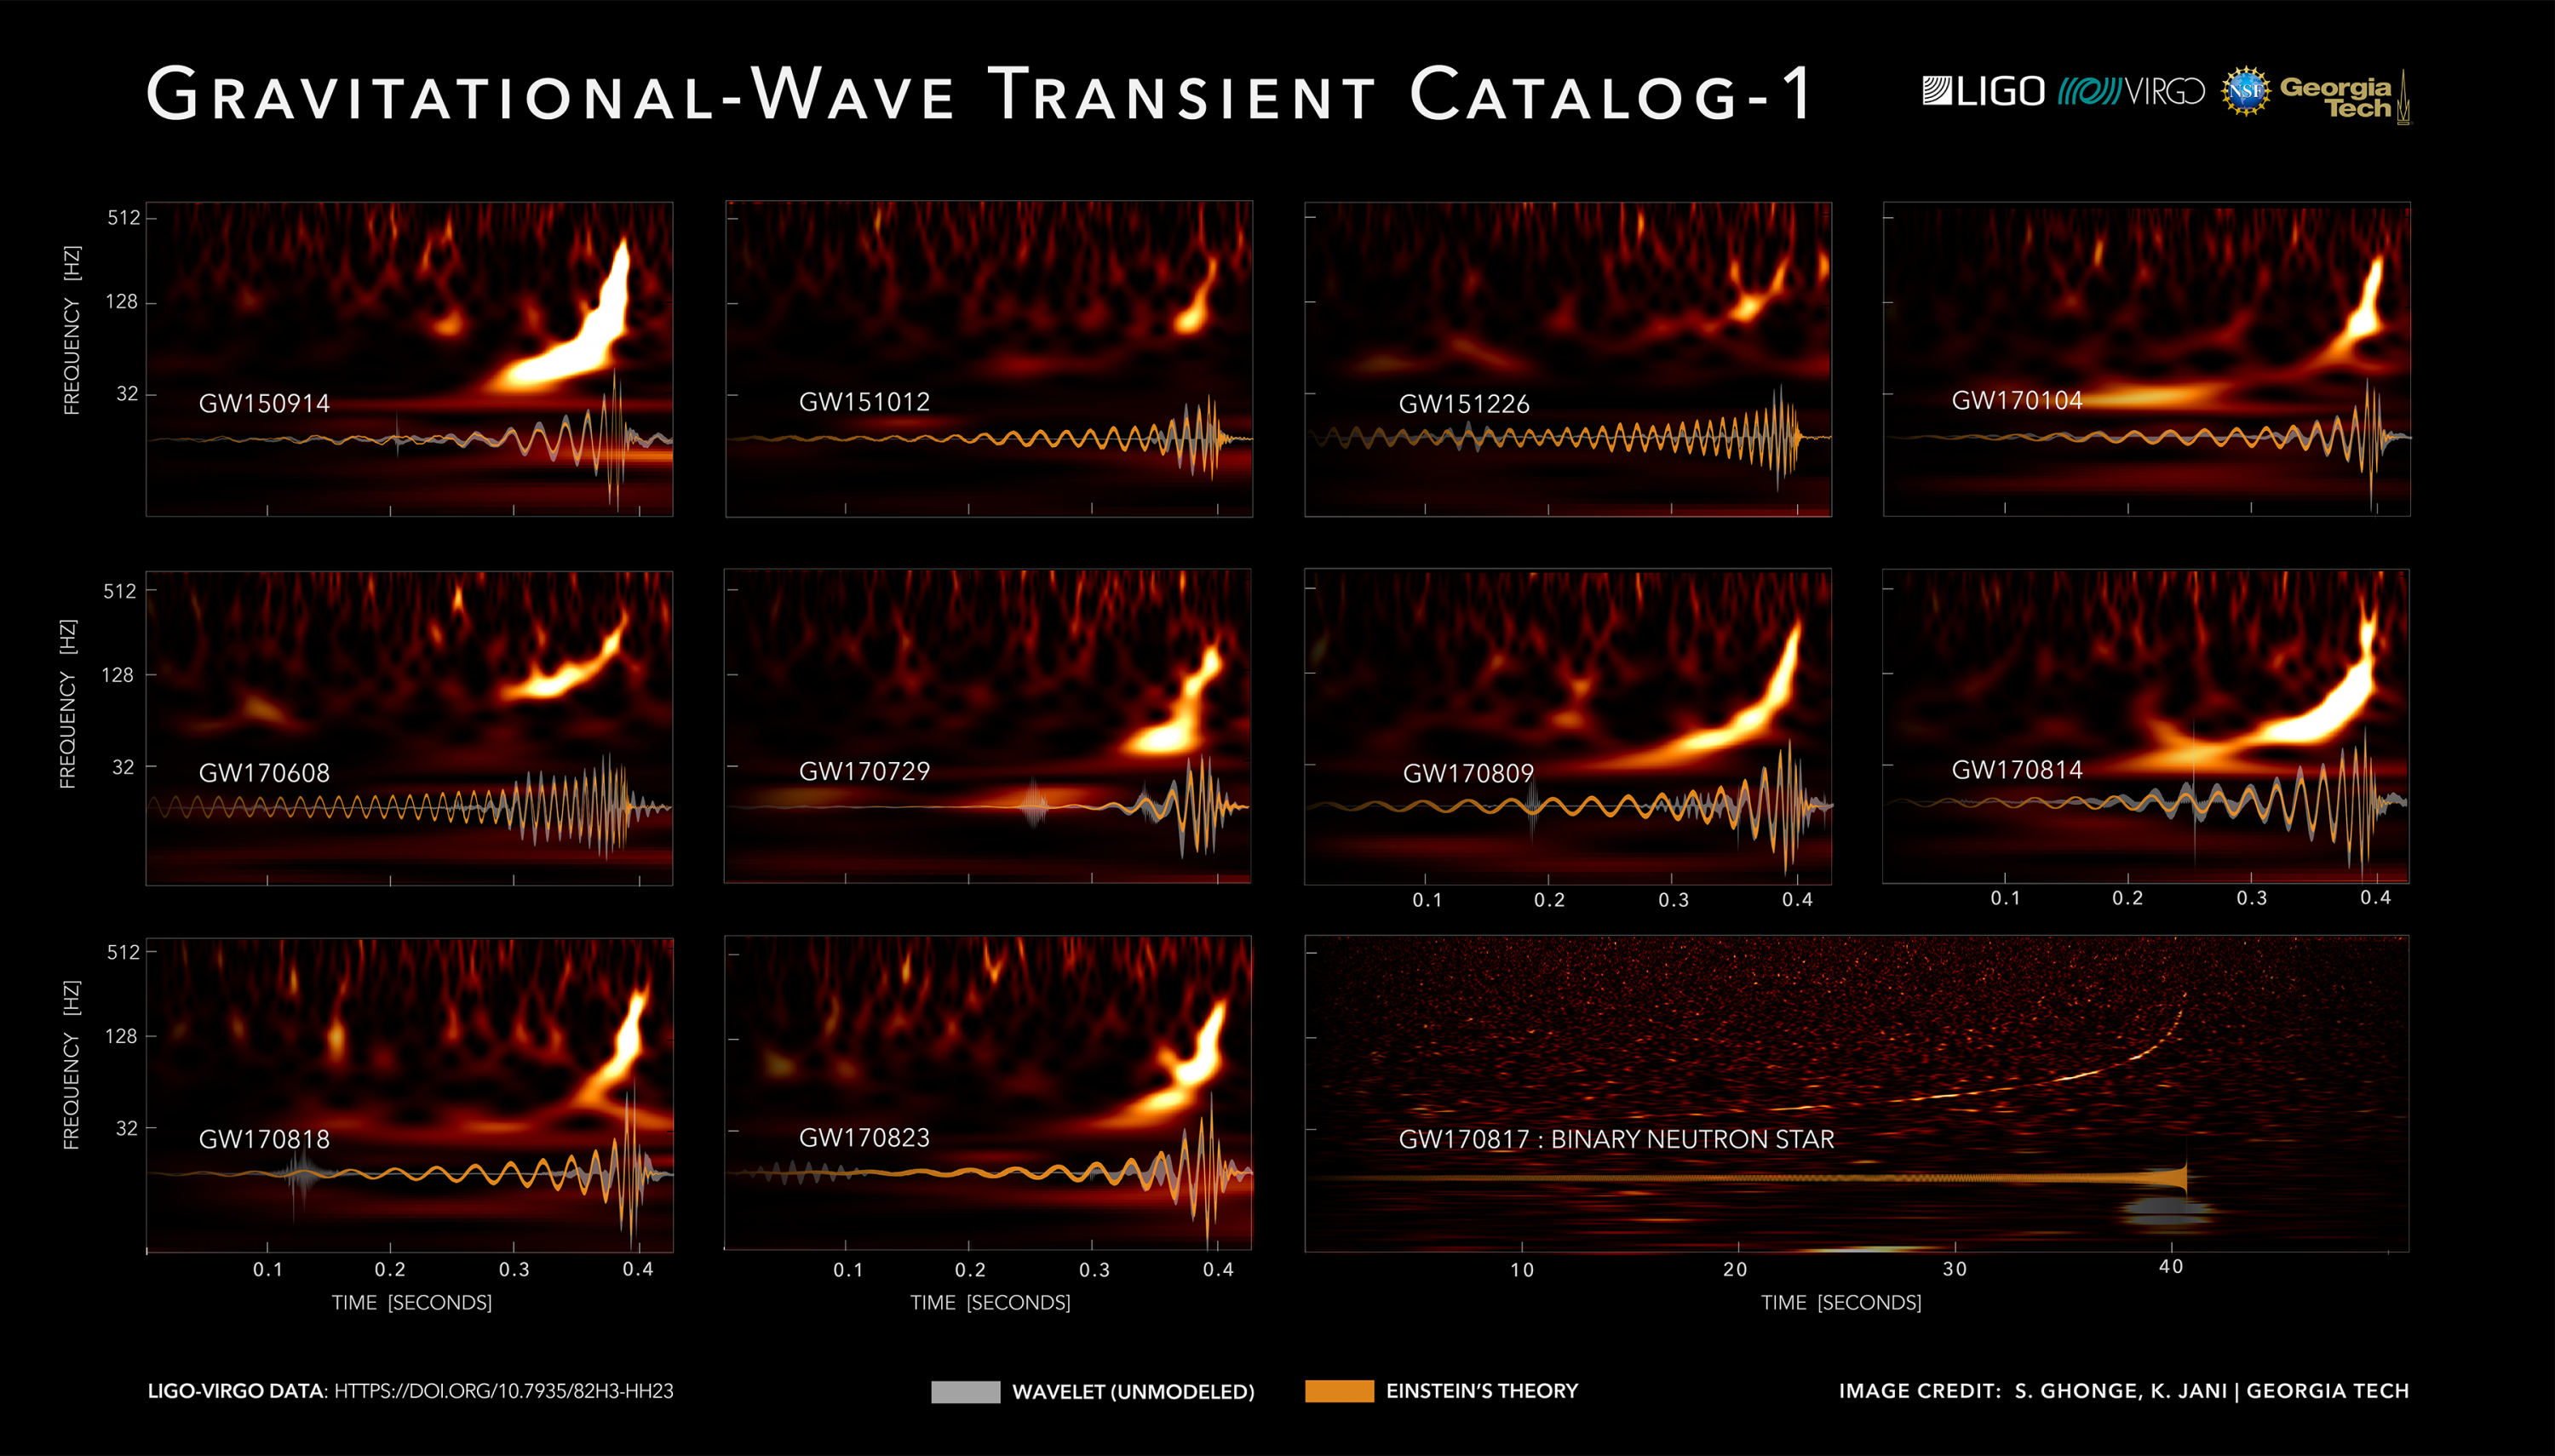 Gravitational wave signals